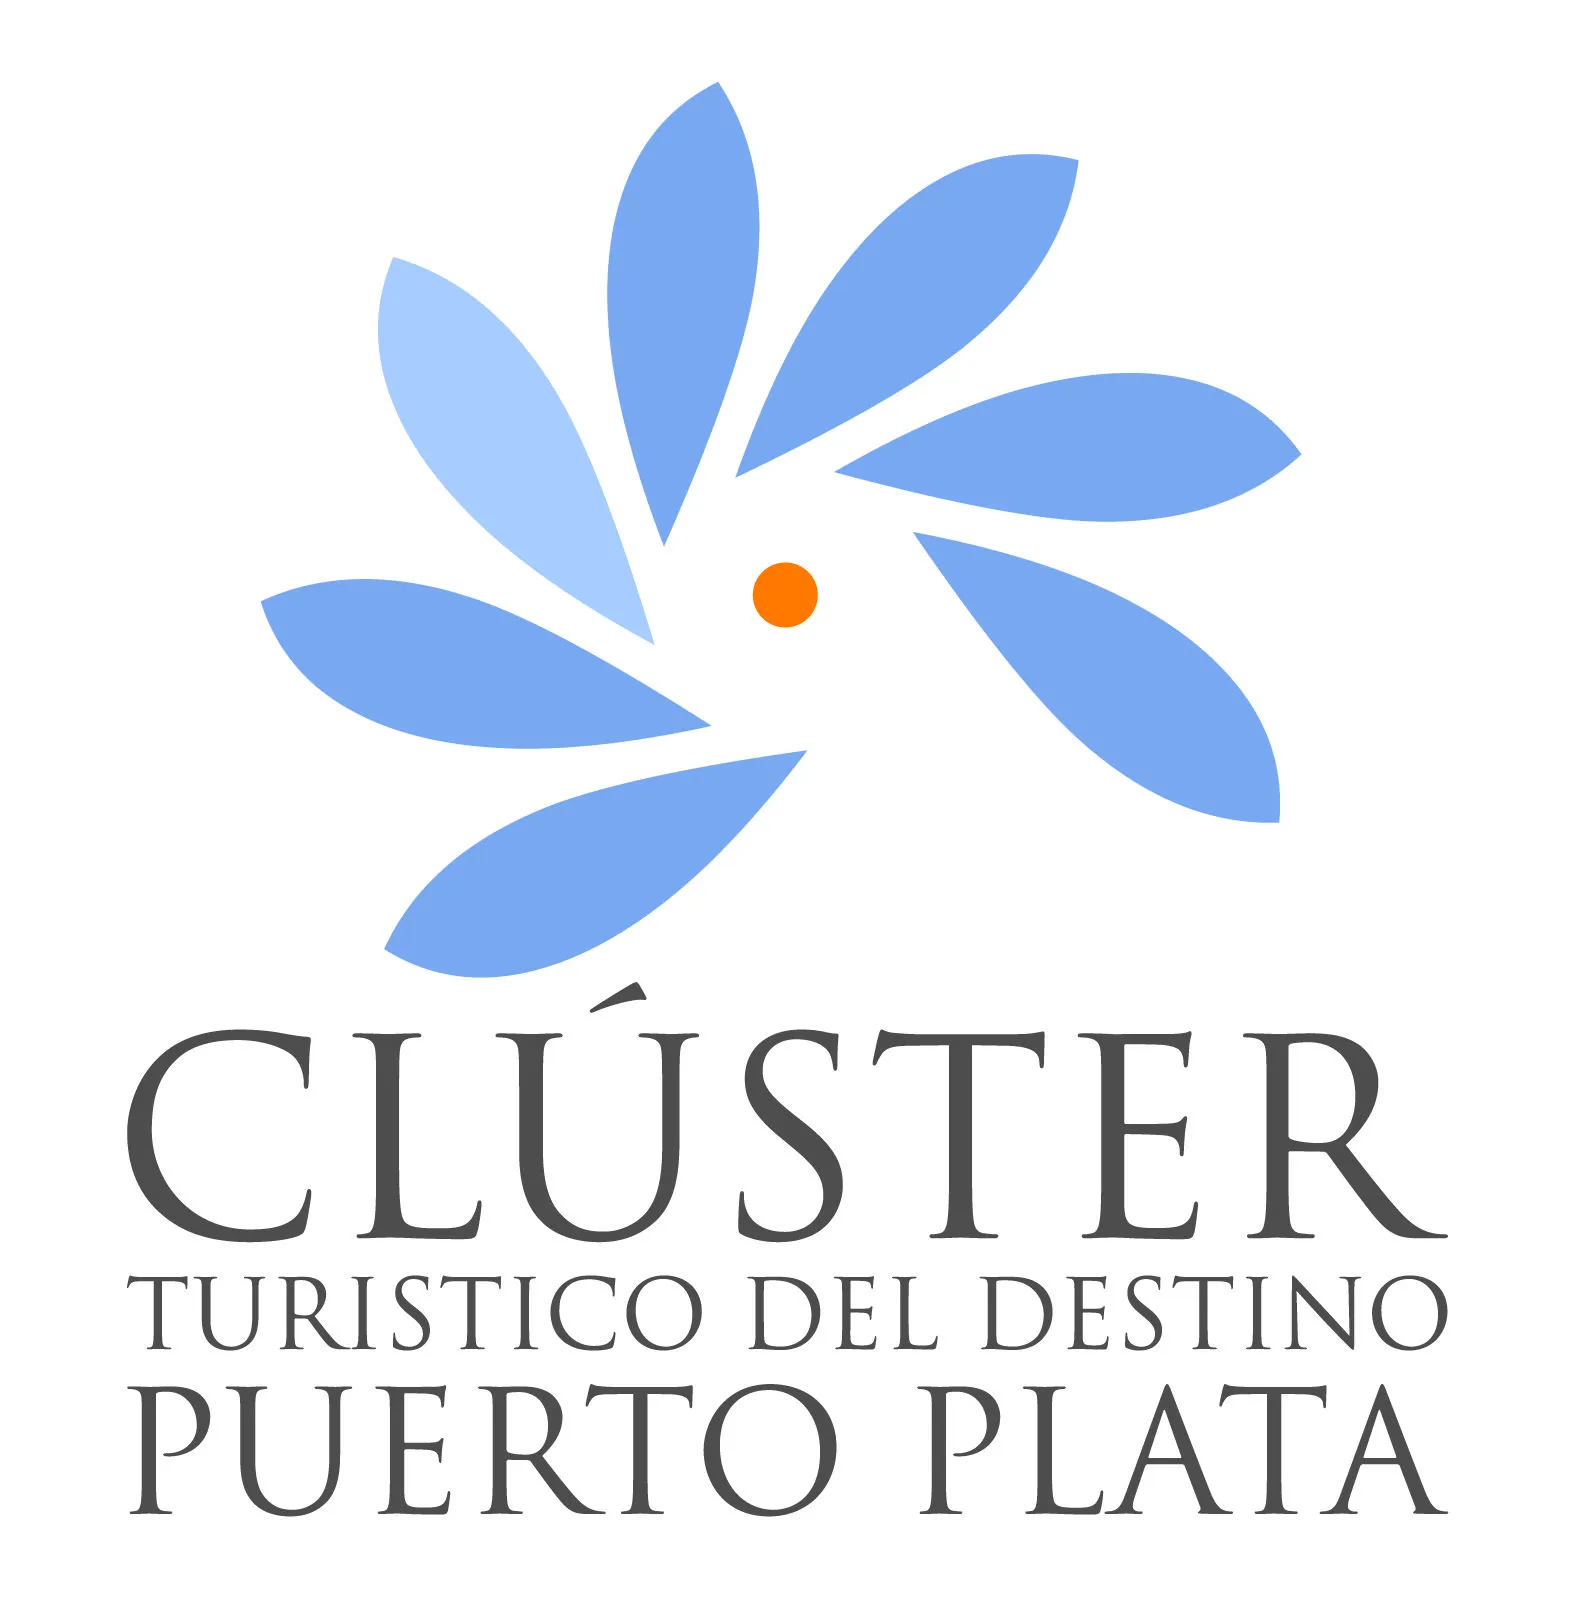 CLUSTER TURÍSTICO DEL DESTINO PUERTO PLATA: 13/05/12 - 20/